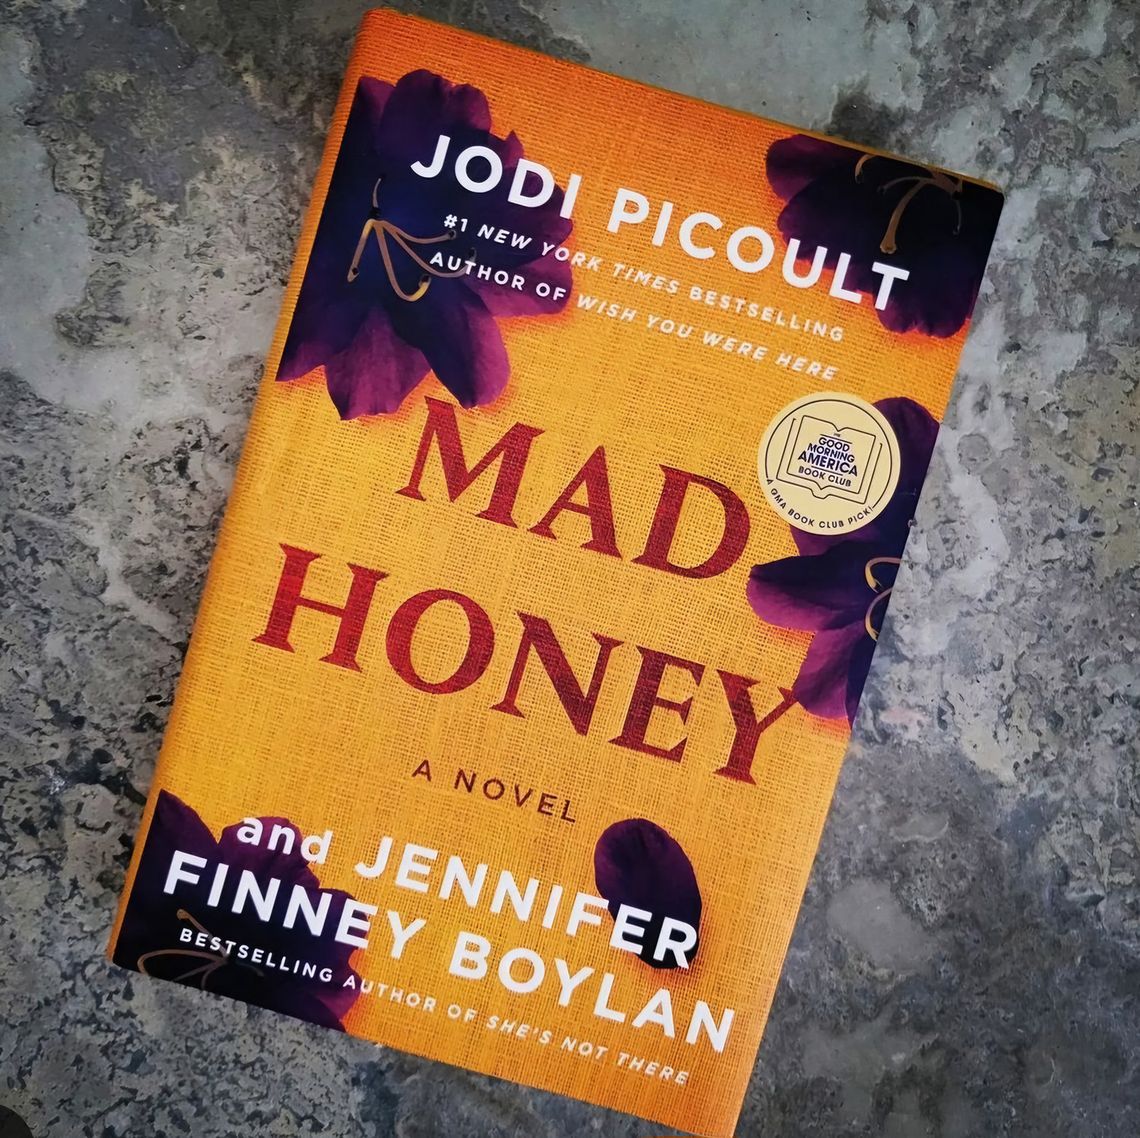 Allison's Book Report: “Mad Honey” by Jodi Picoult and Jennifer Finney Boylan